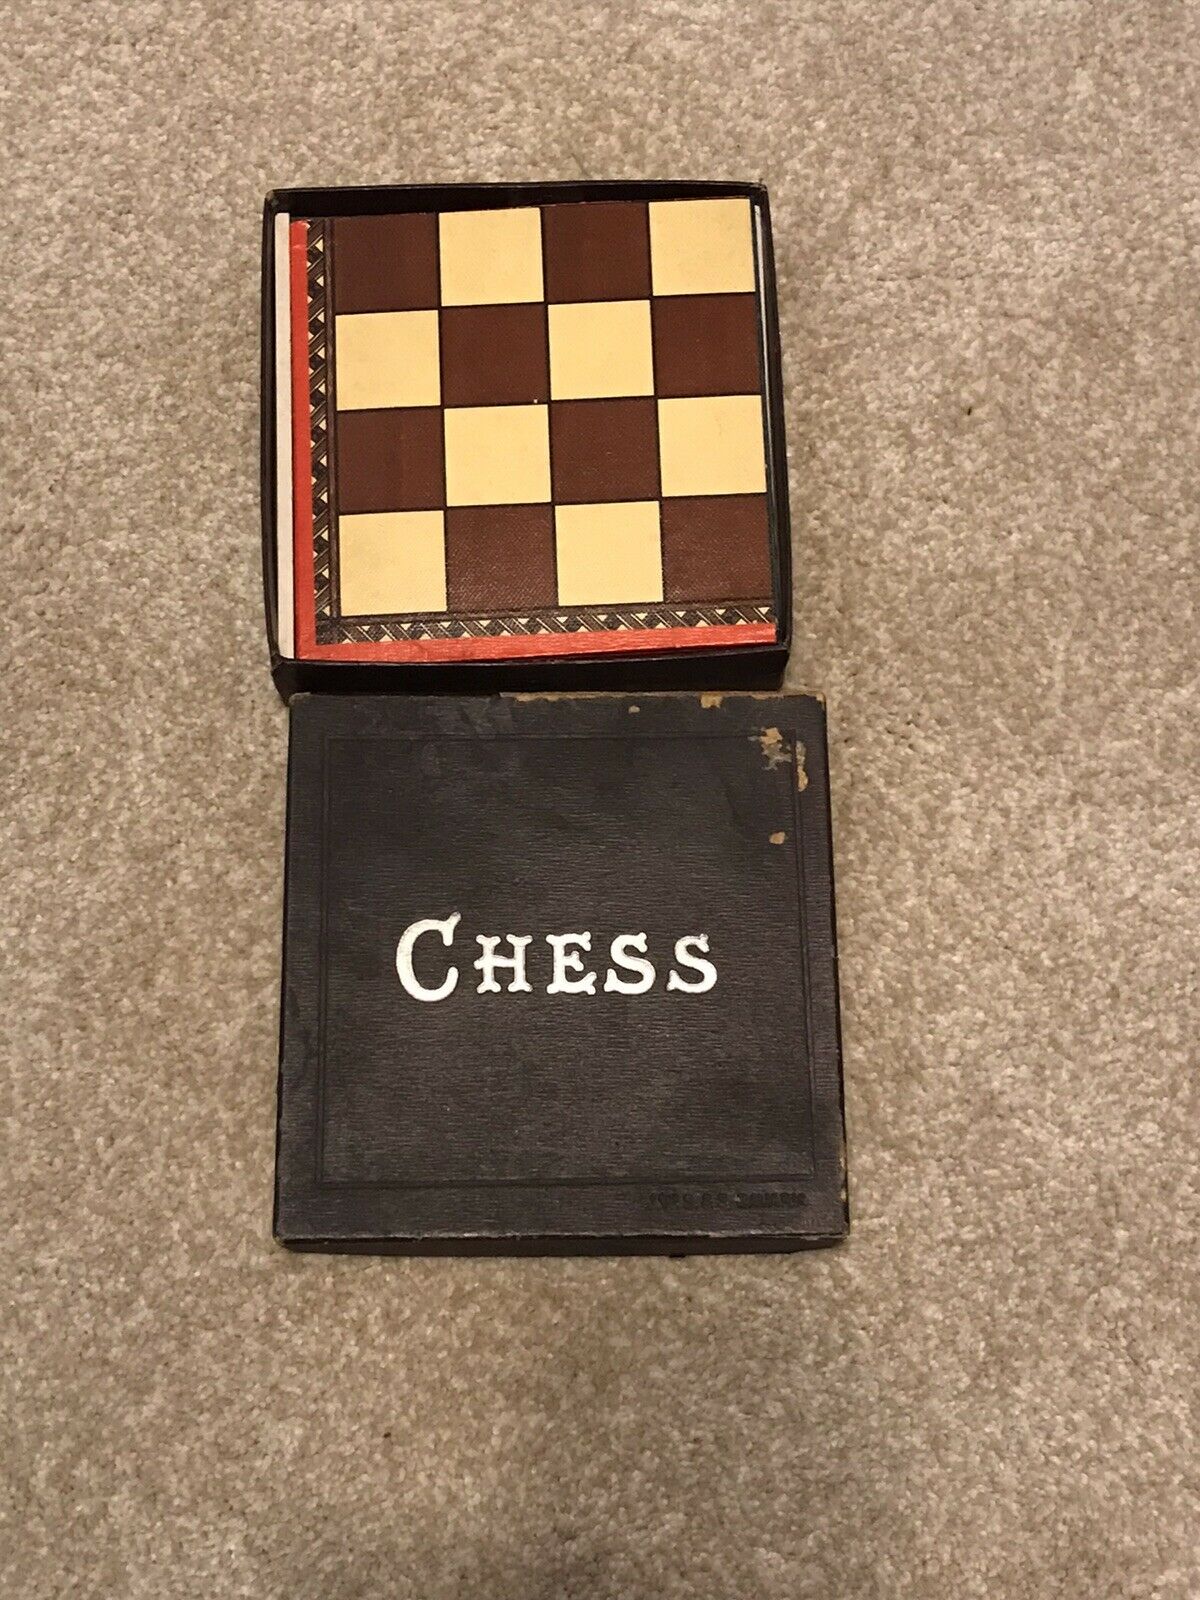 Vintage Wooden Chess Set Portable Folding Game